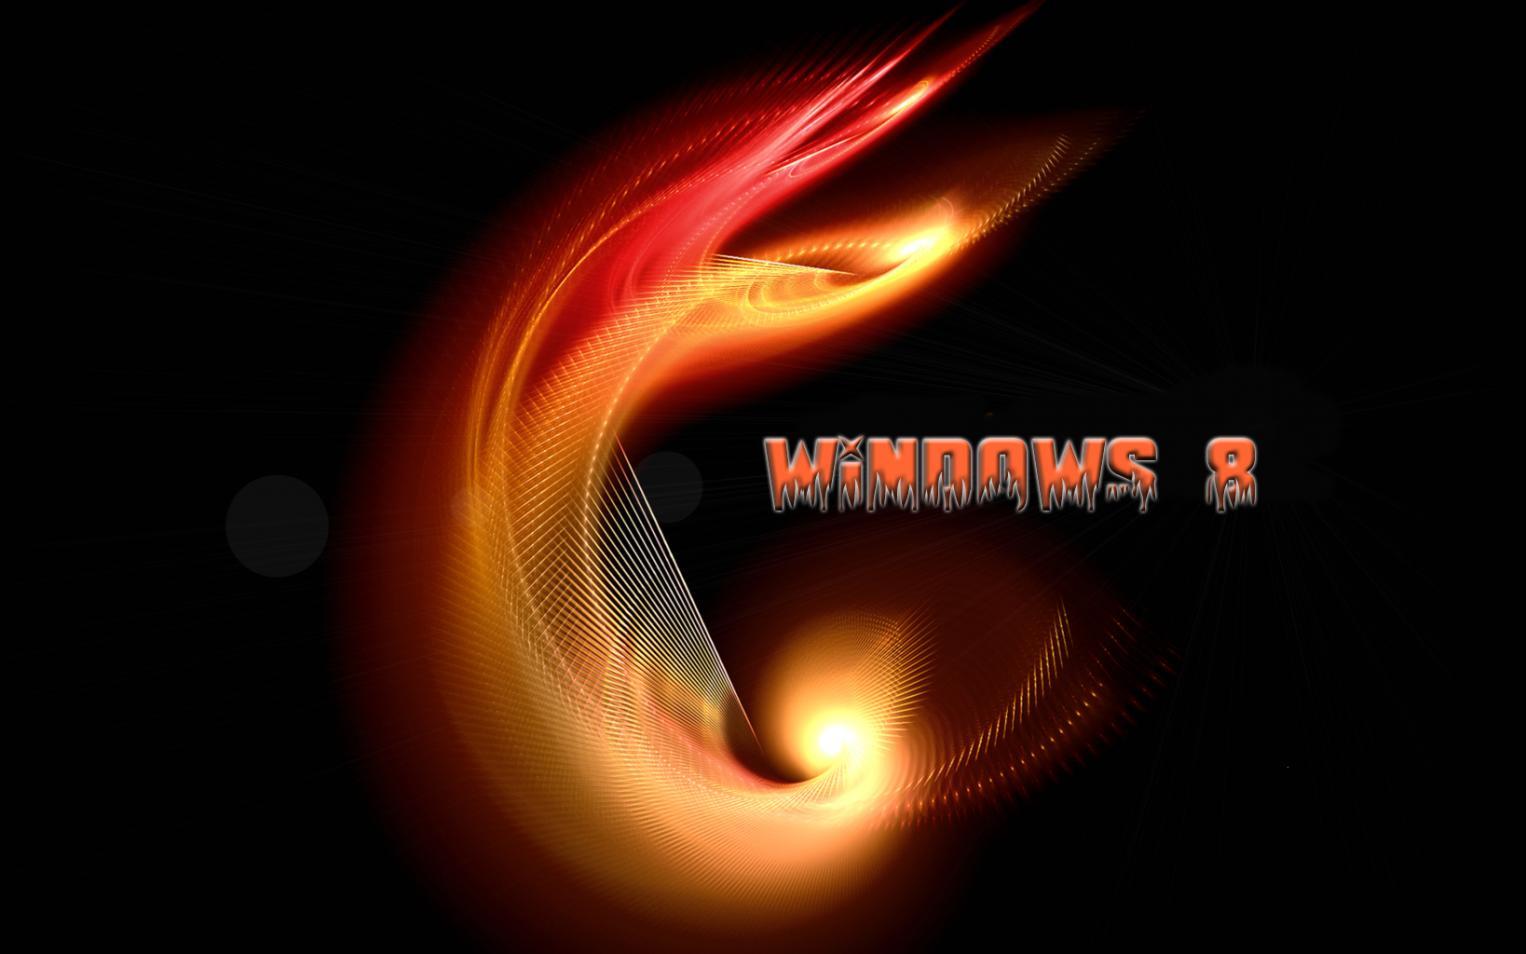 Free Download New Wallpaper - Windows 7 - HD Wallpaper 